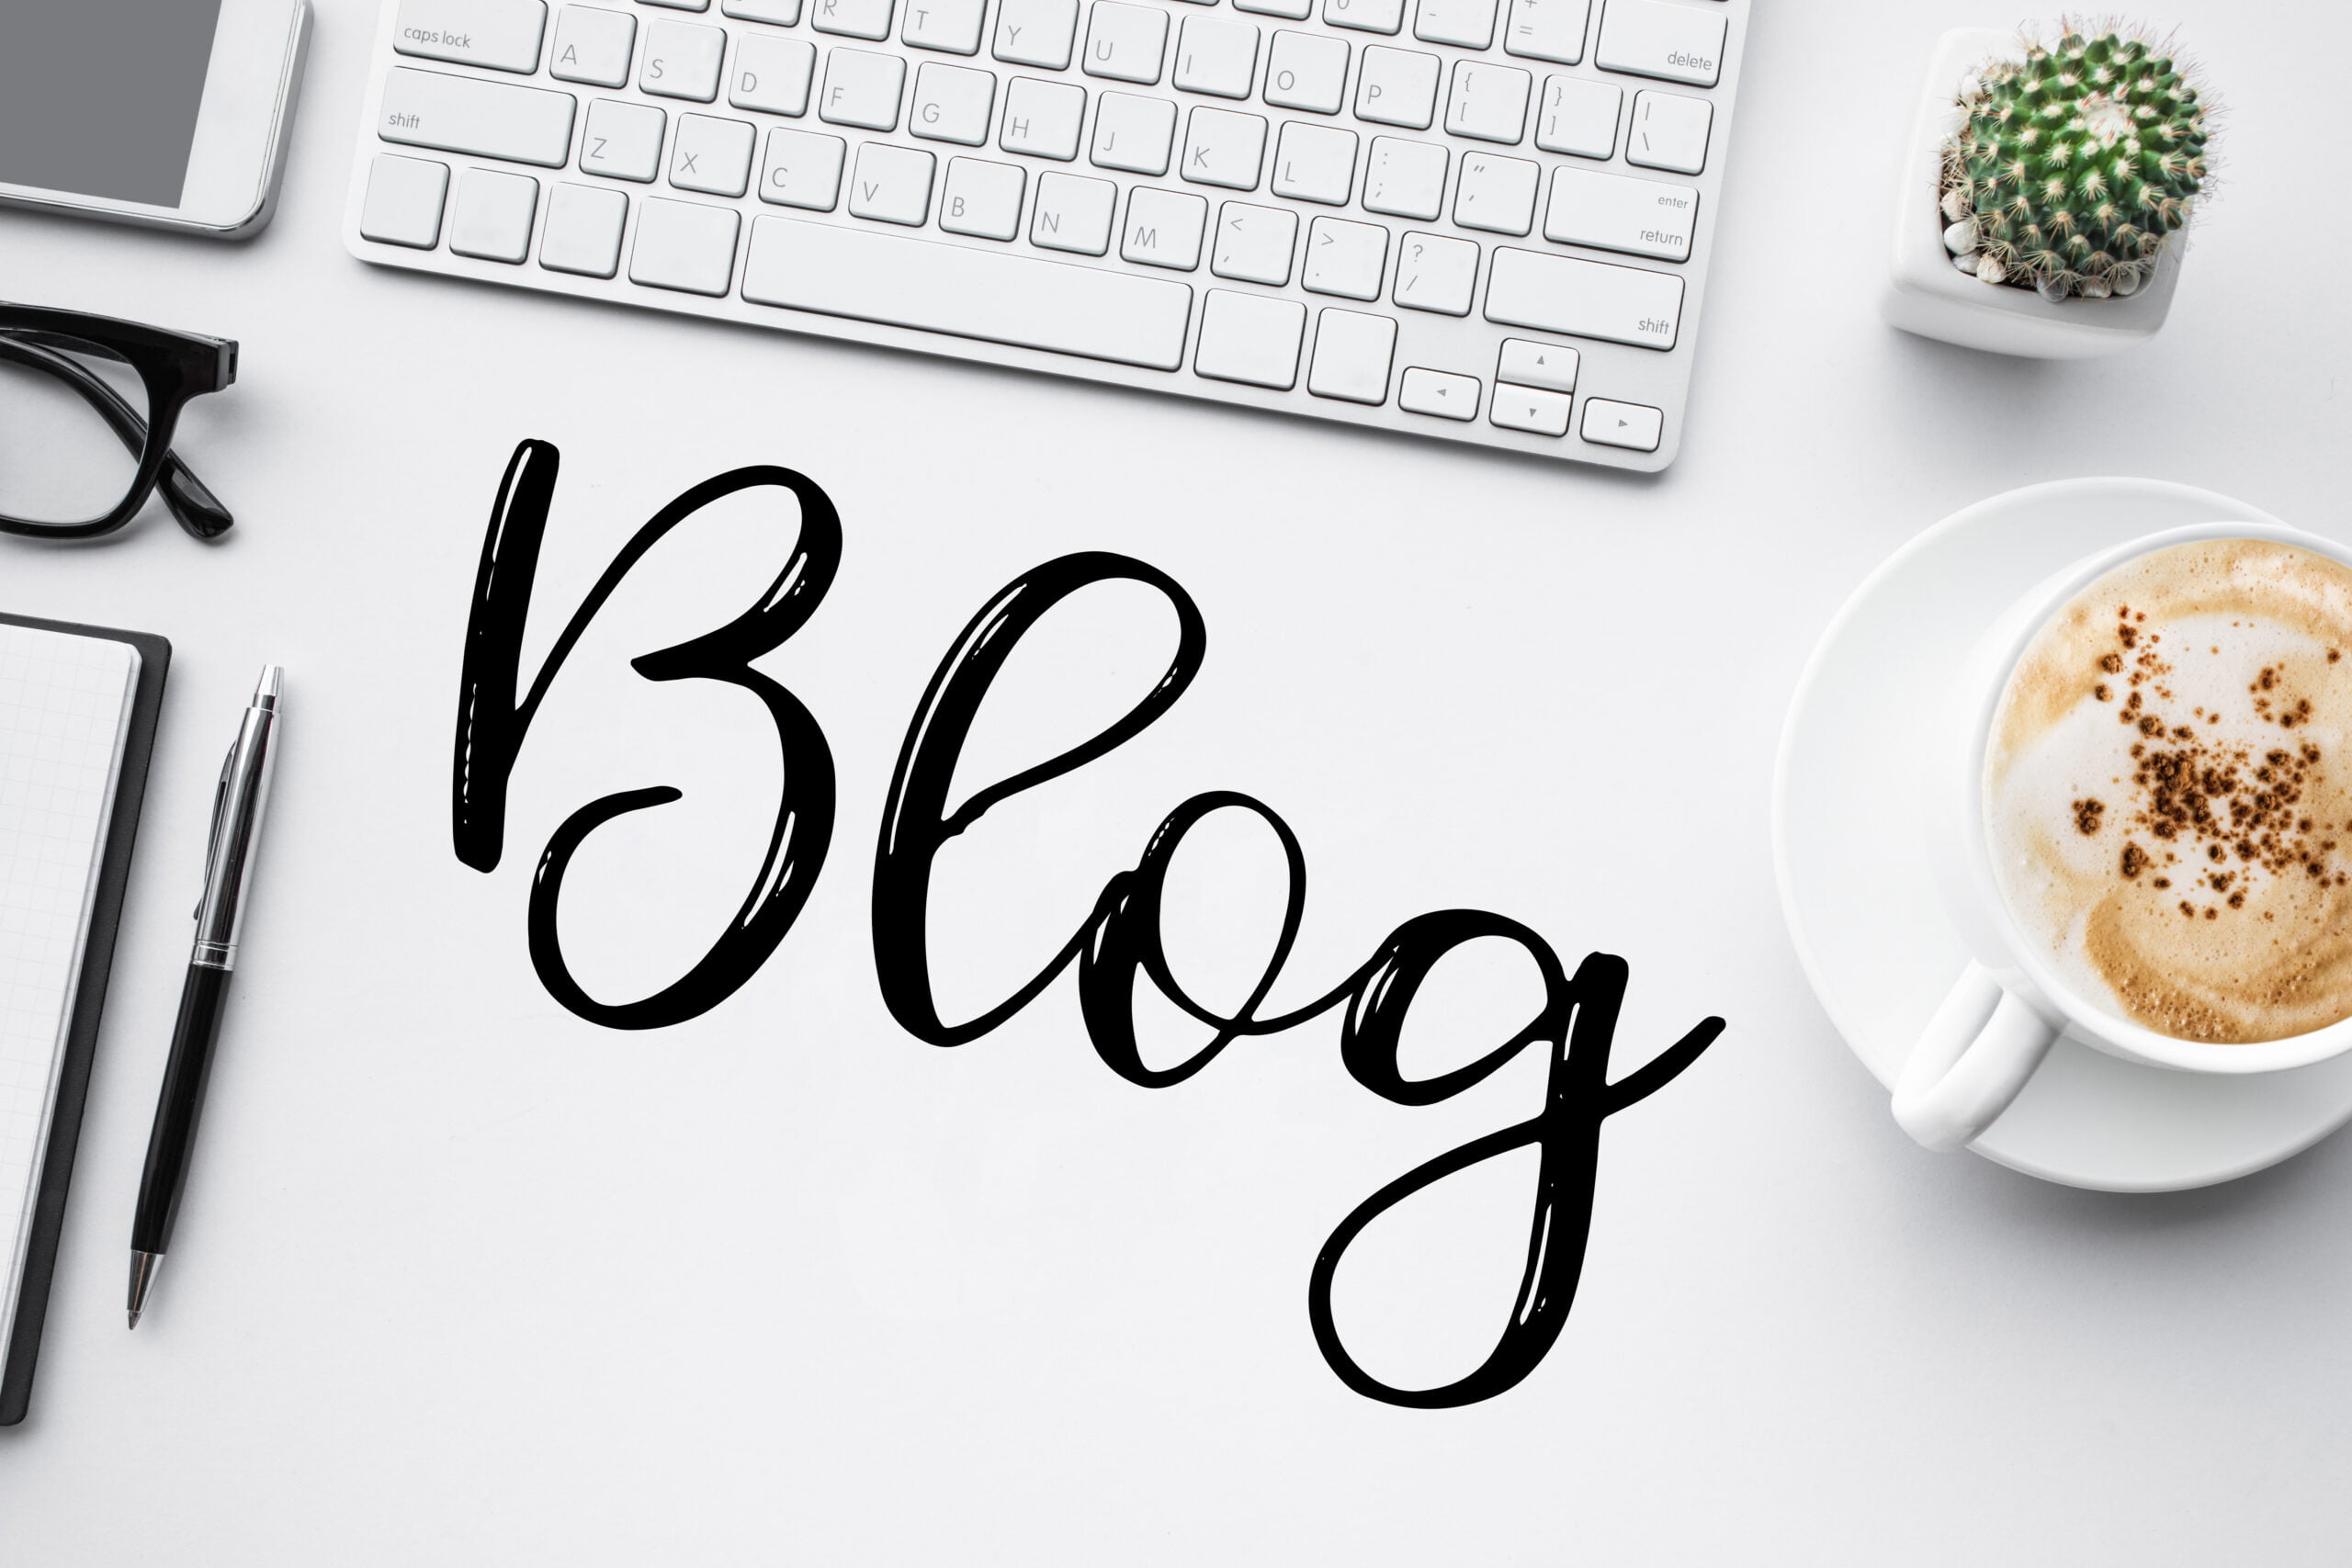 Finanzblog, Versicherungsblog, Finanzblog, Blog